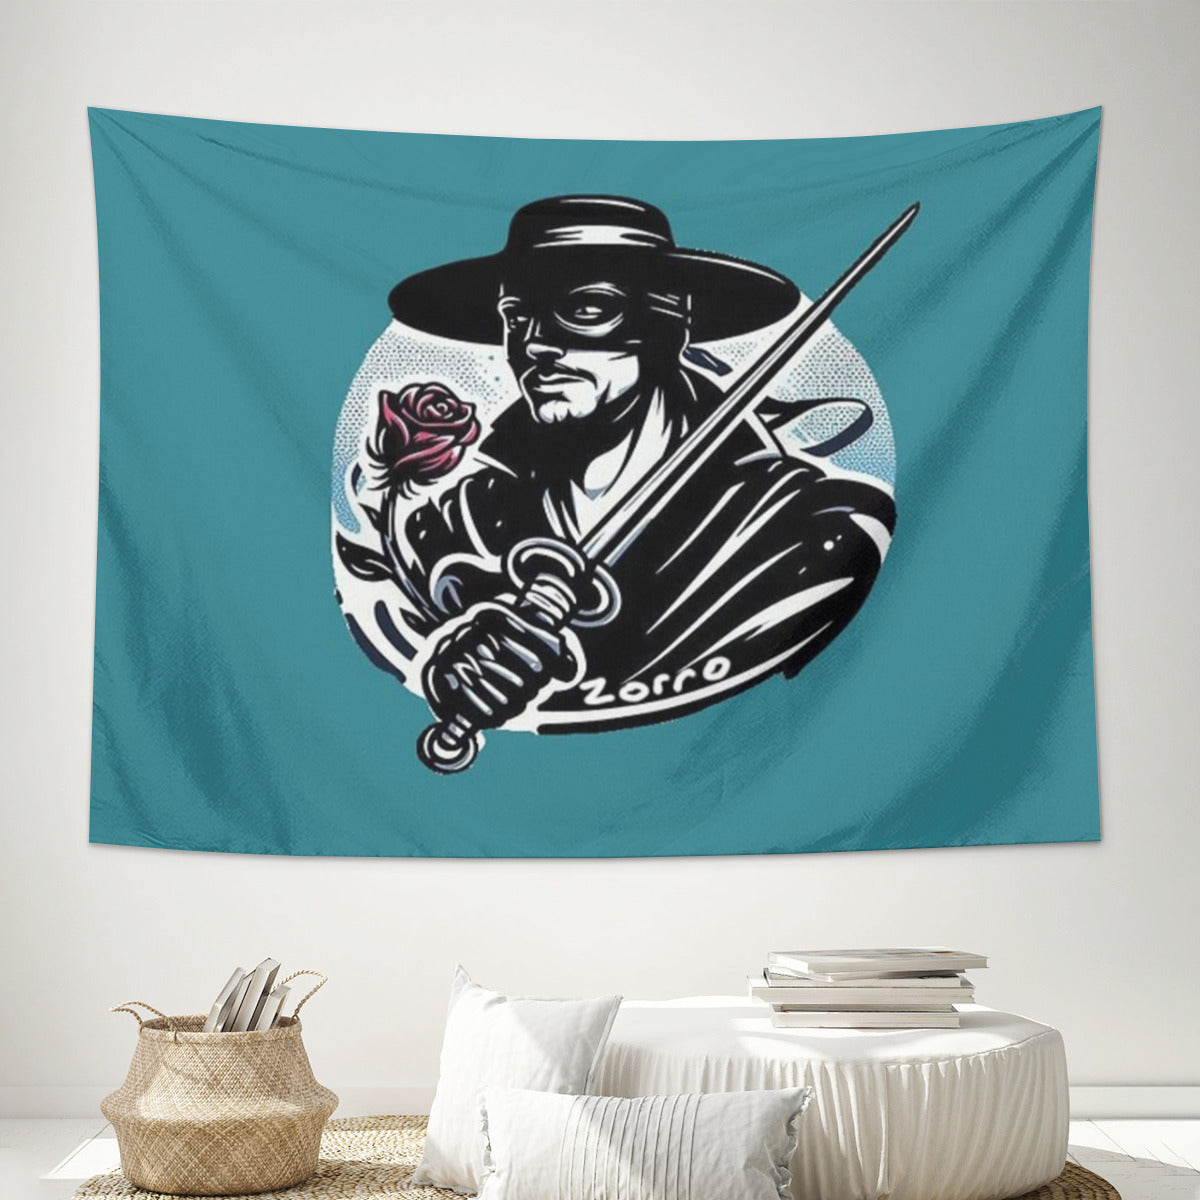 Zorro Tapestry